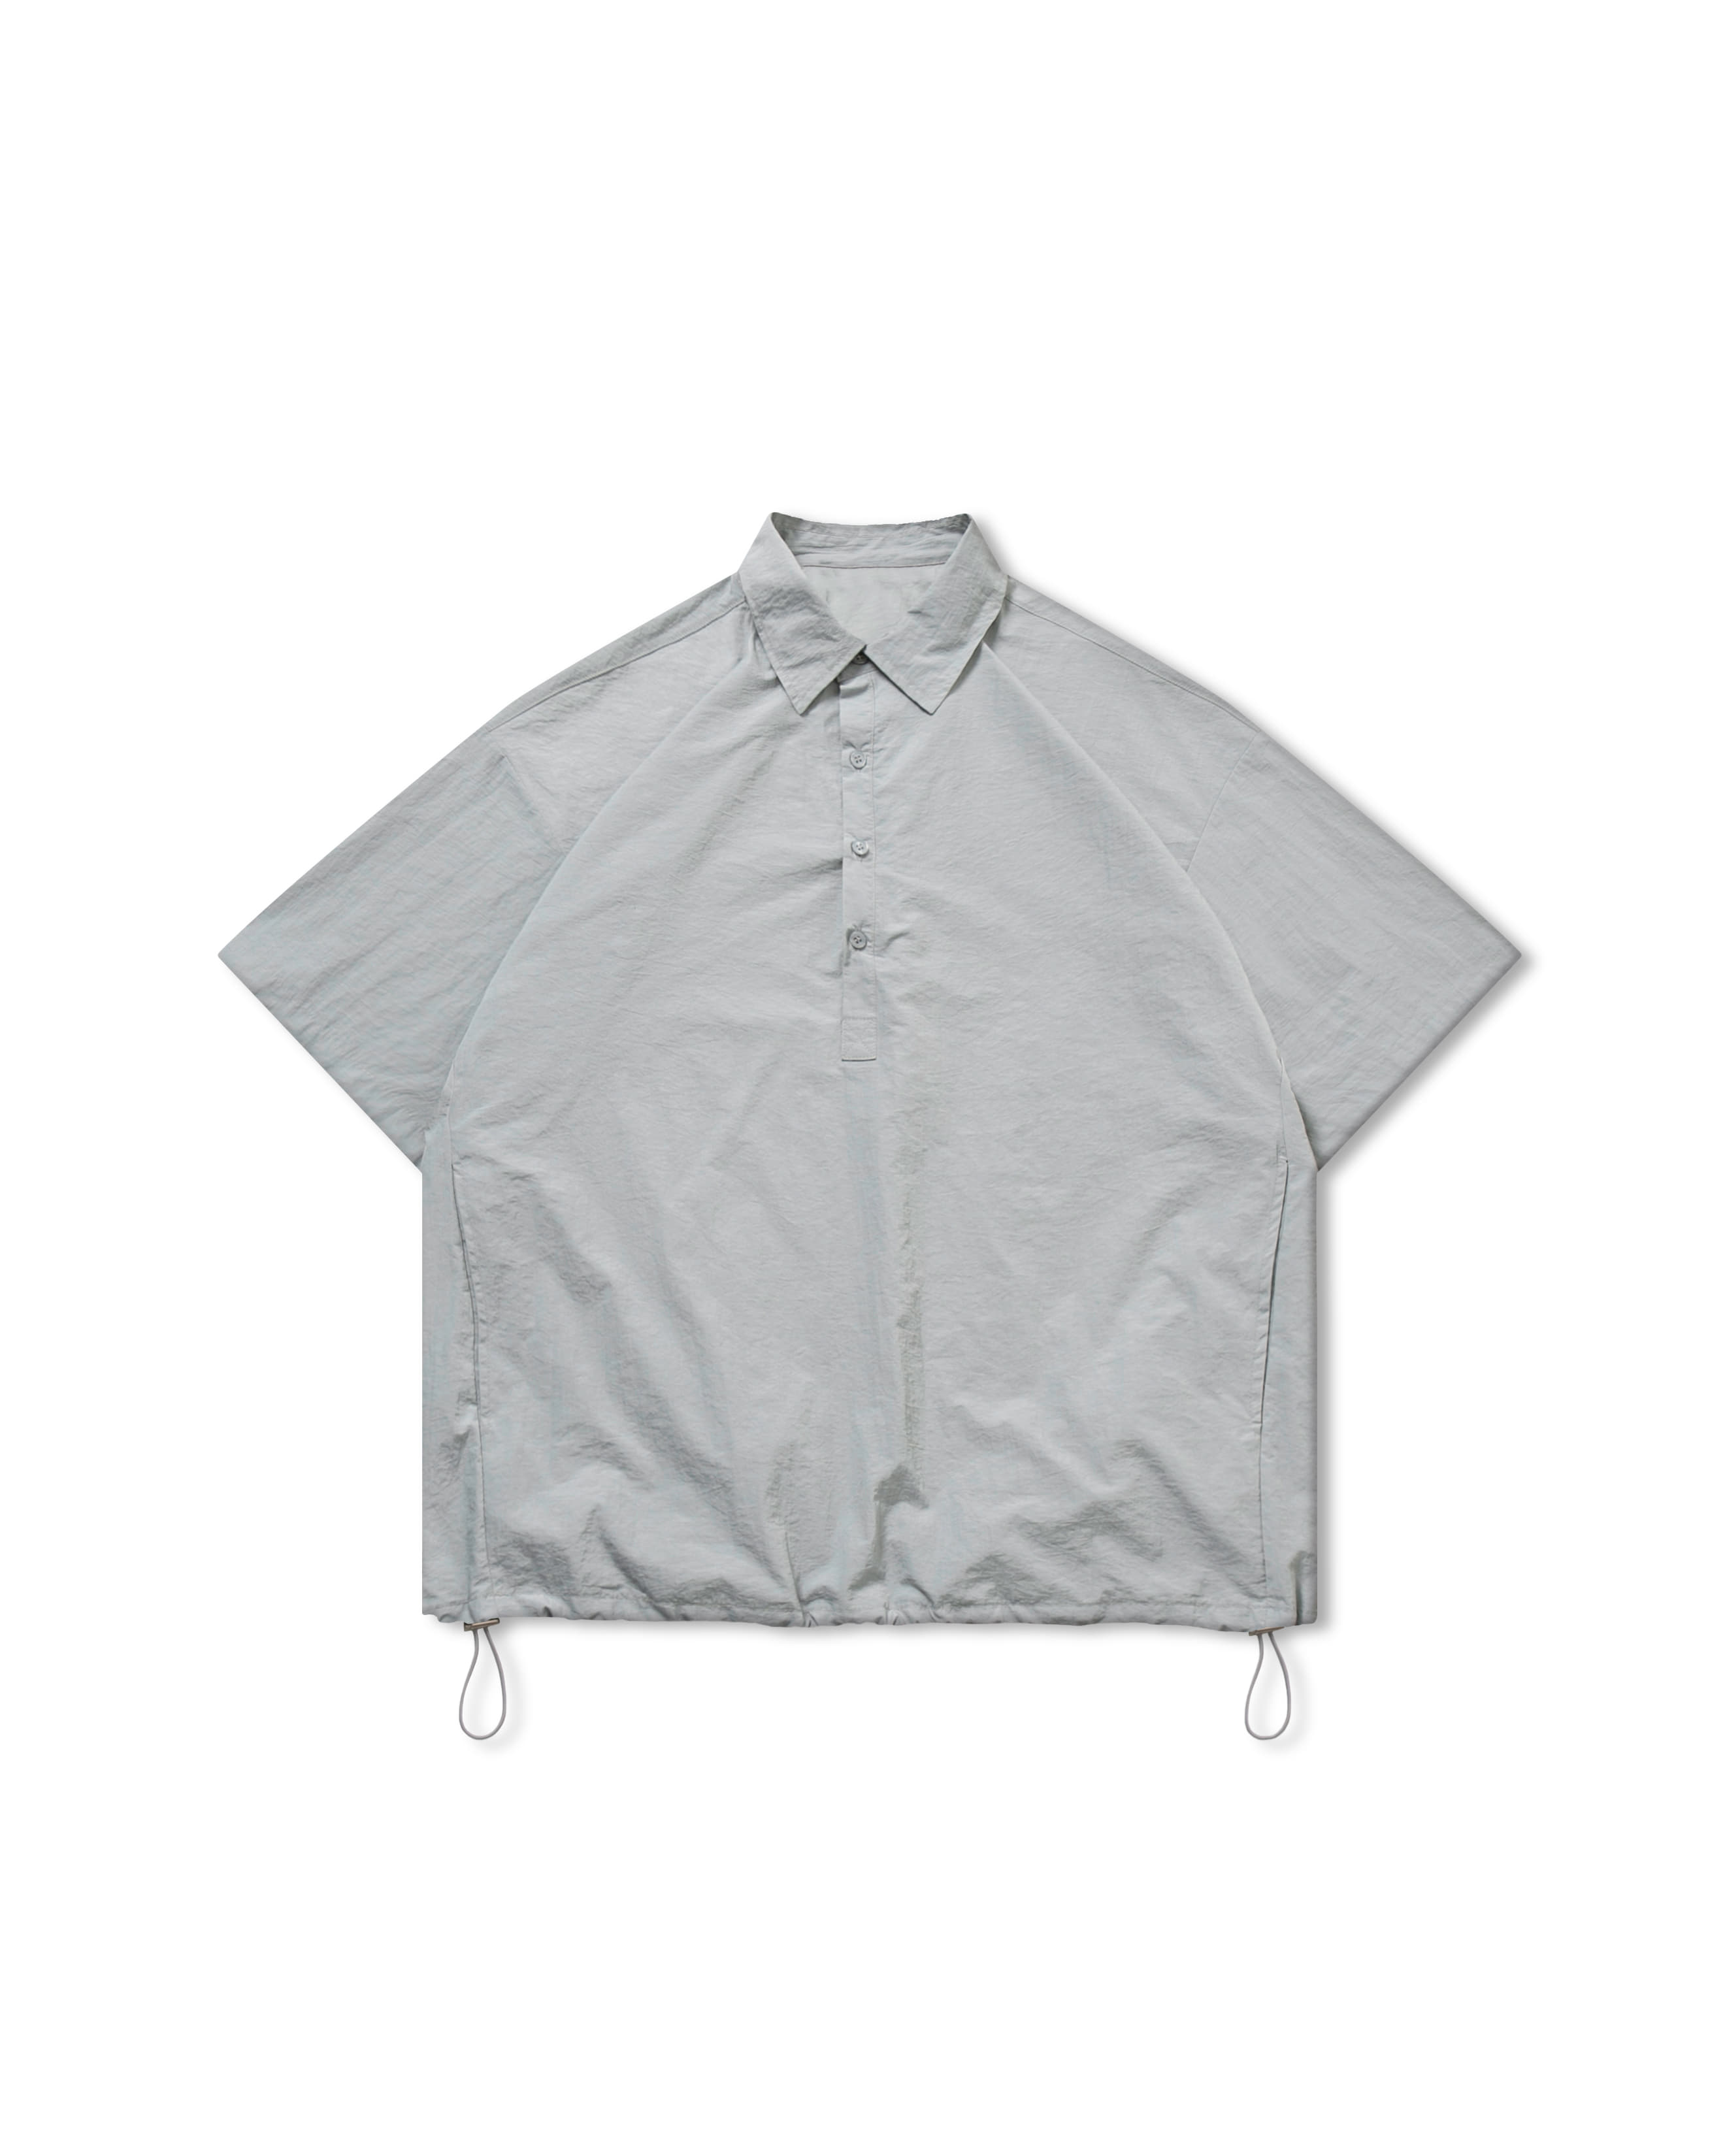 Stopper Nylon Anorak Half Shirt - Grey